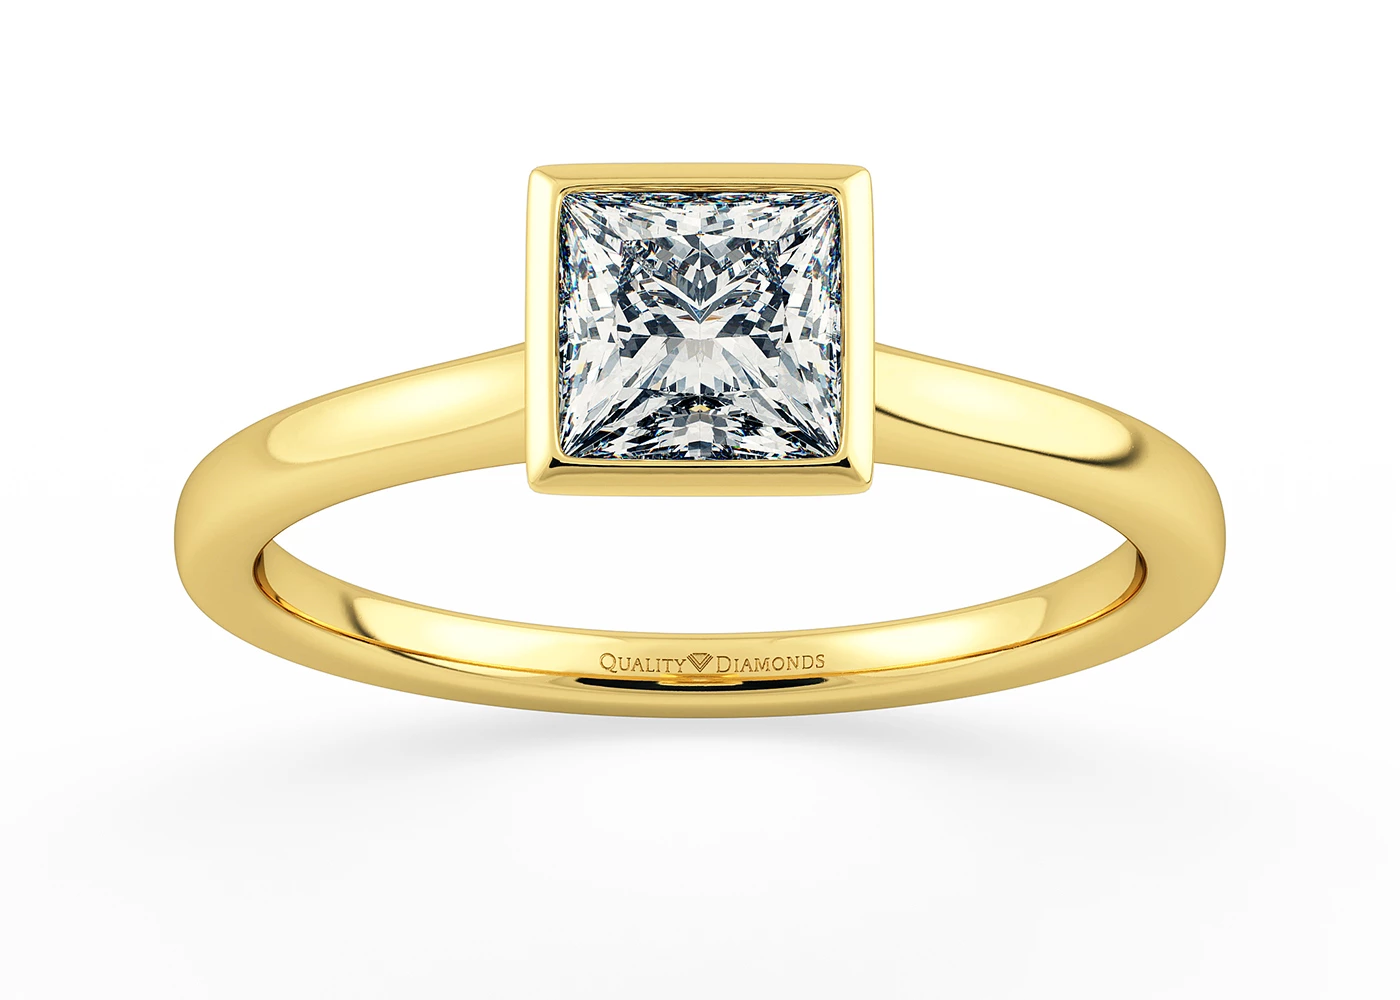 Princess Carina Diamond Ring in 18K Yellow Gold